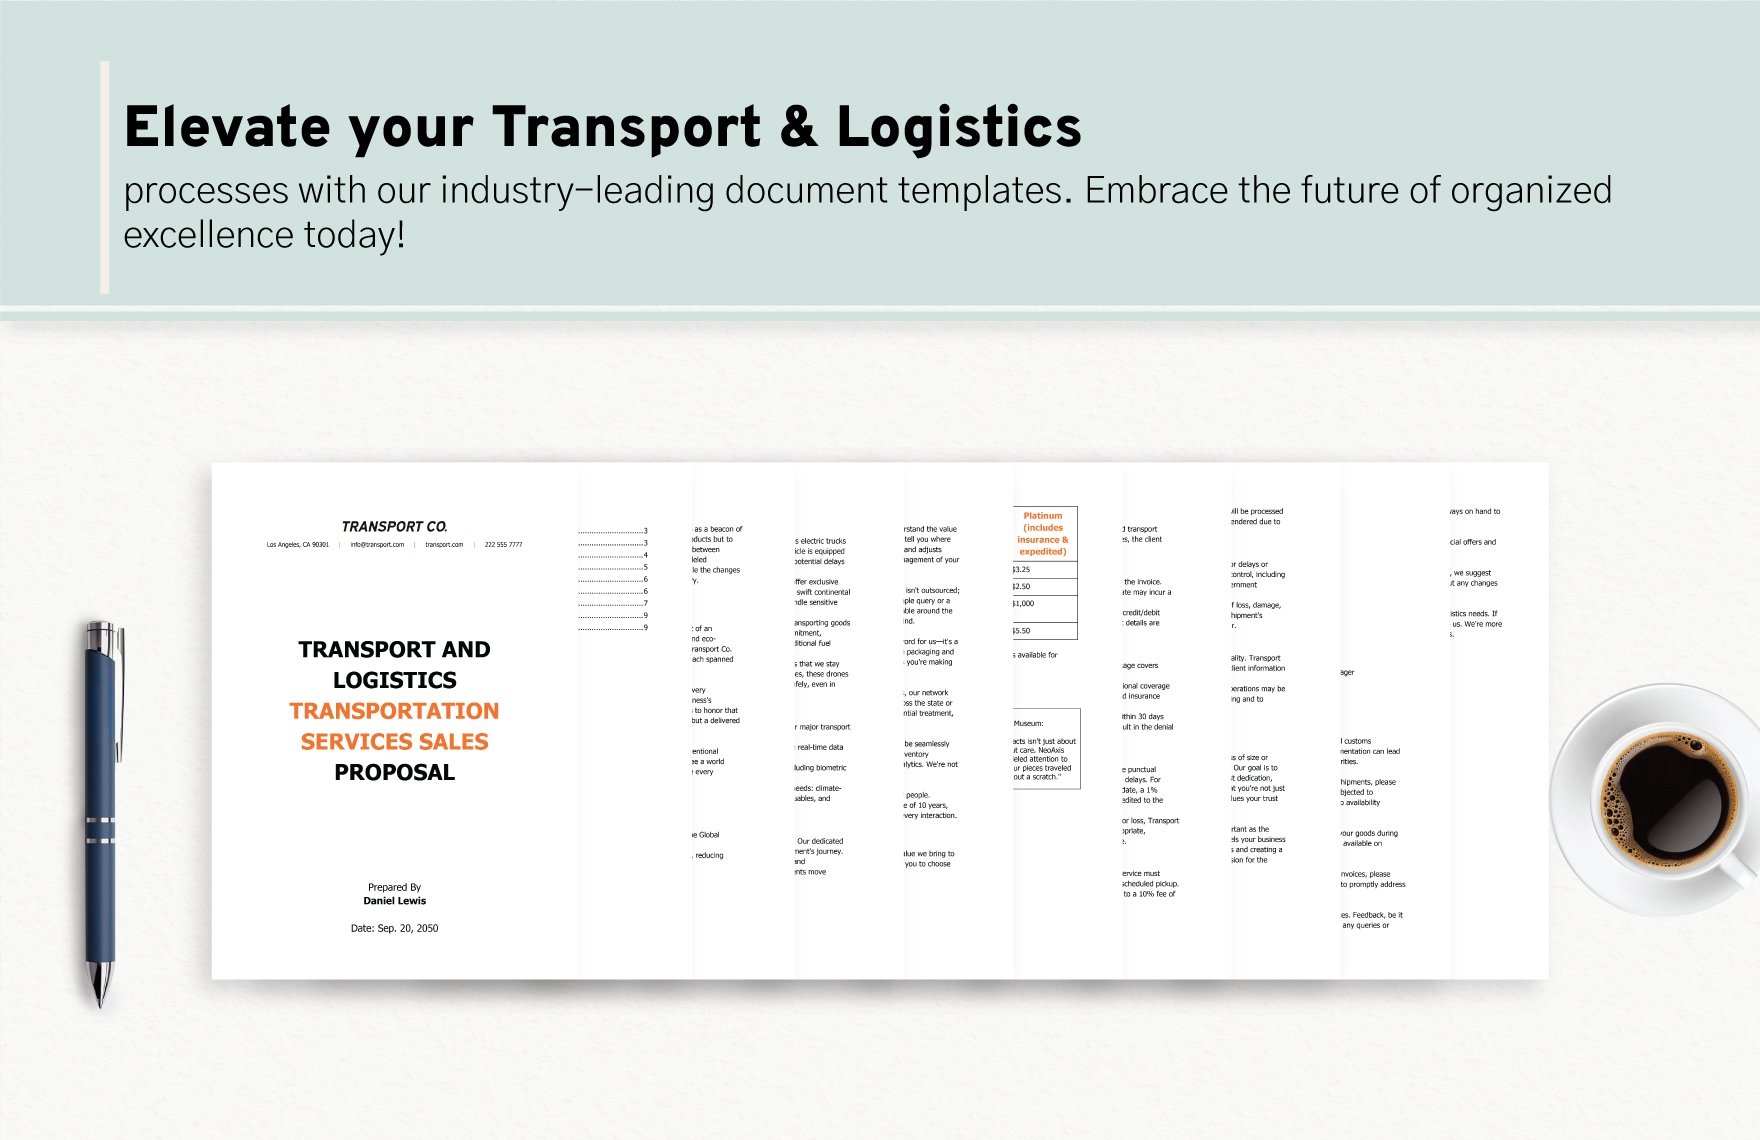 Transport and Logistics Transportation Services Sales Proposal Template